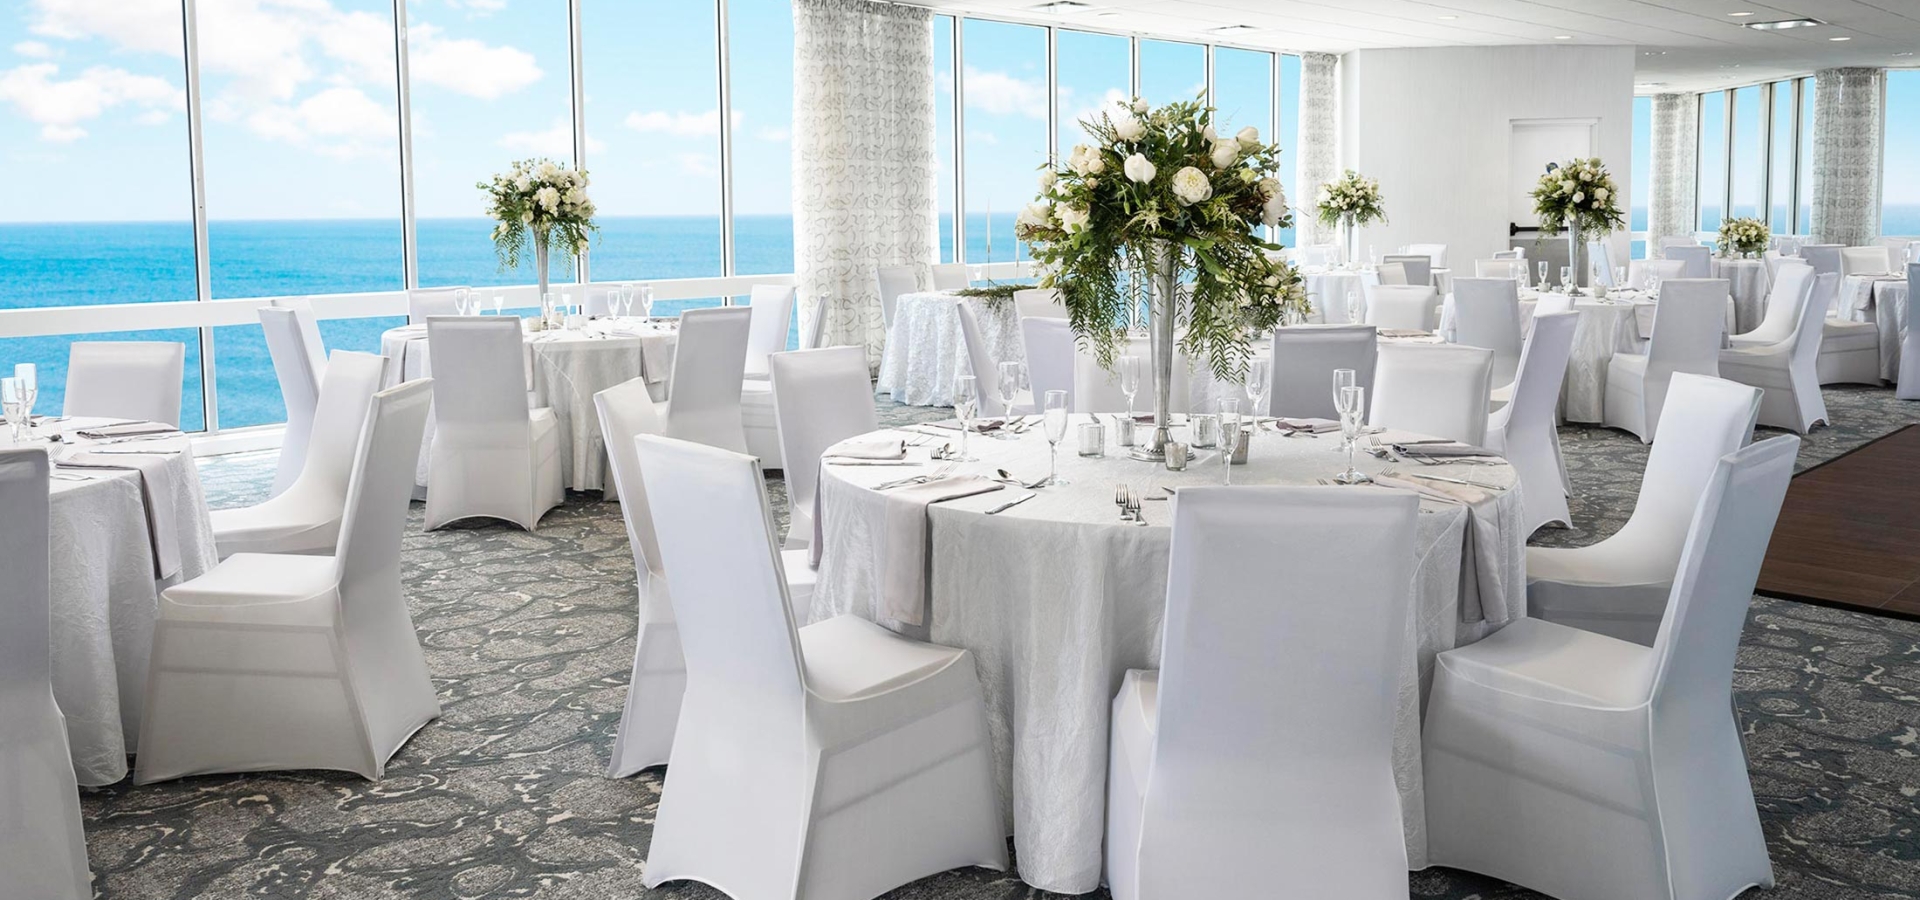 Tables set for wedding in ocean view ballroom